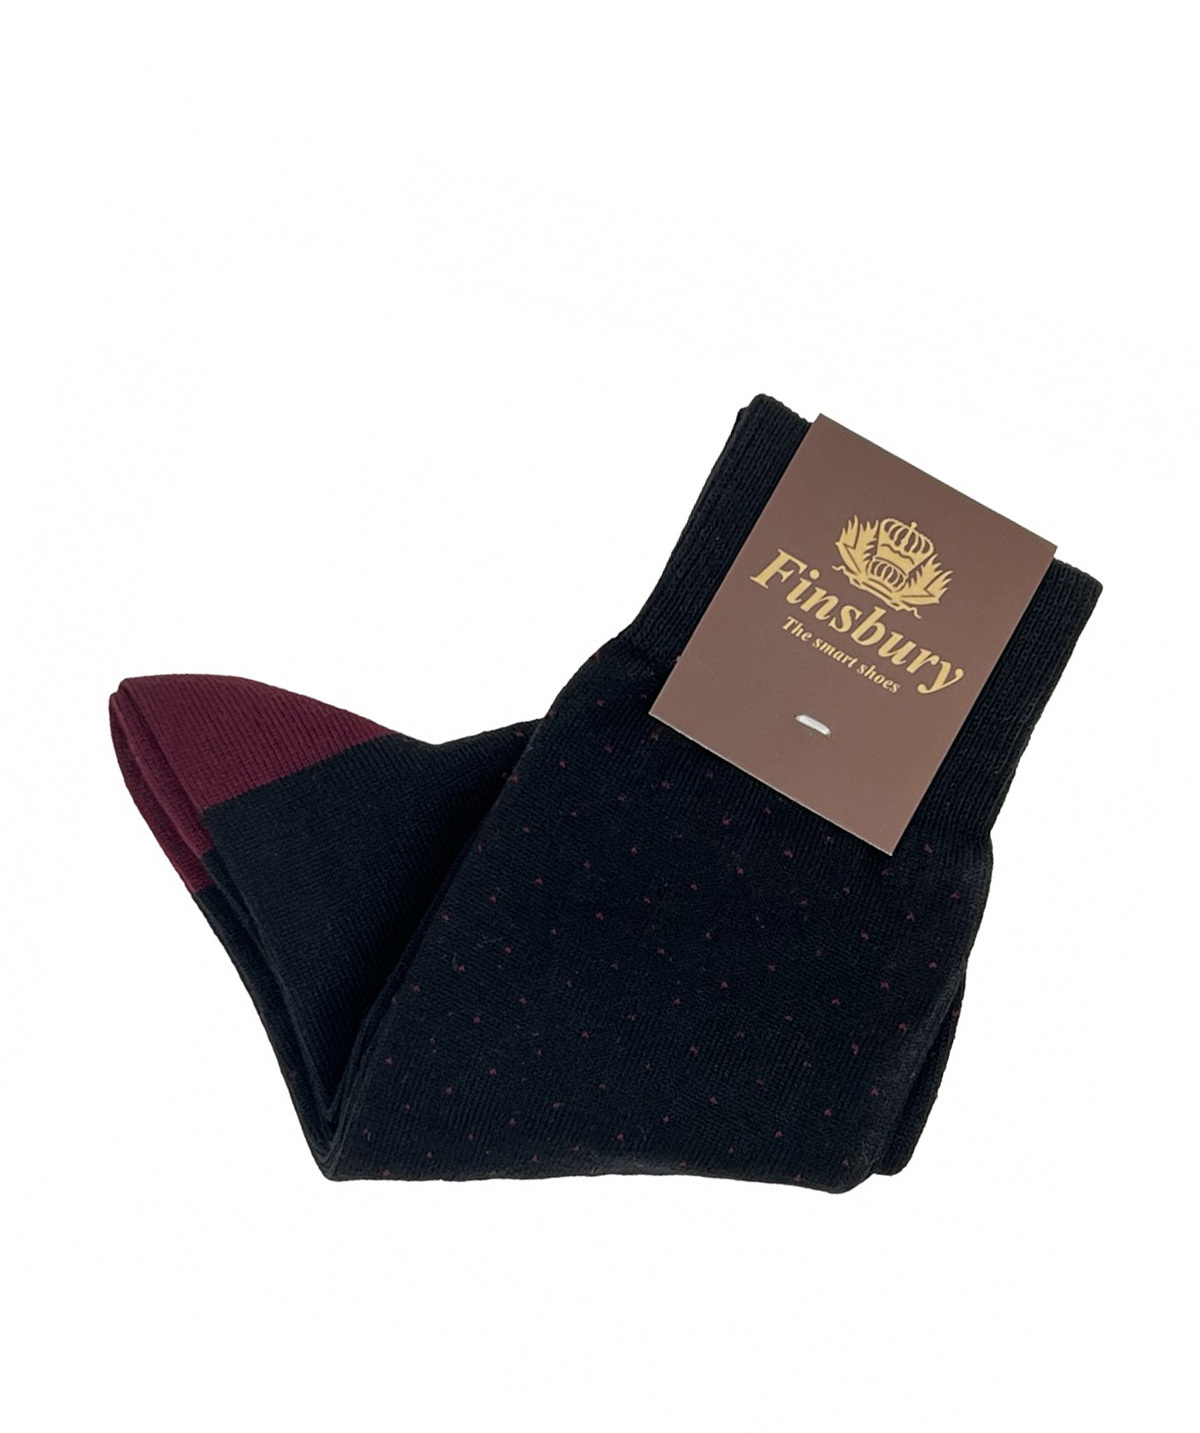 Black and Burgundy Cotton Socks